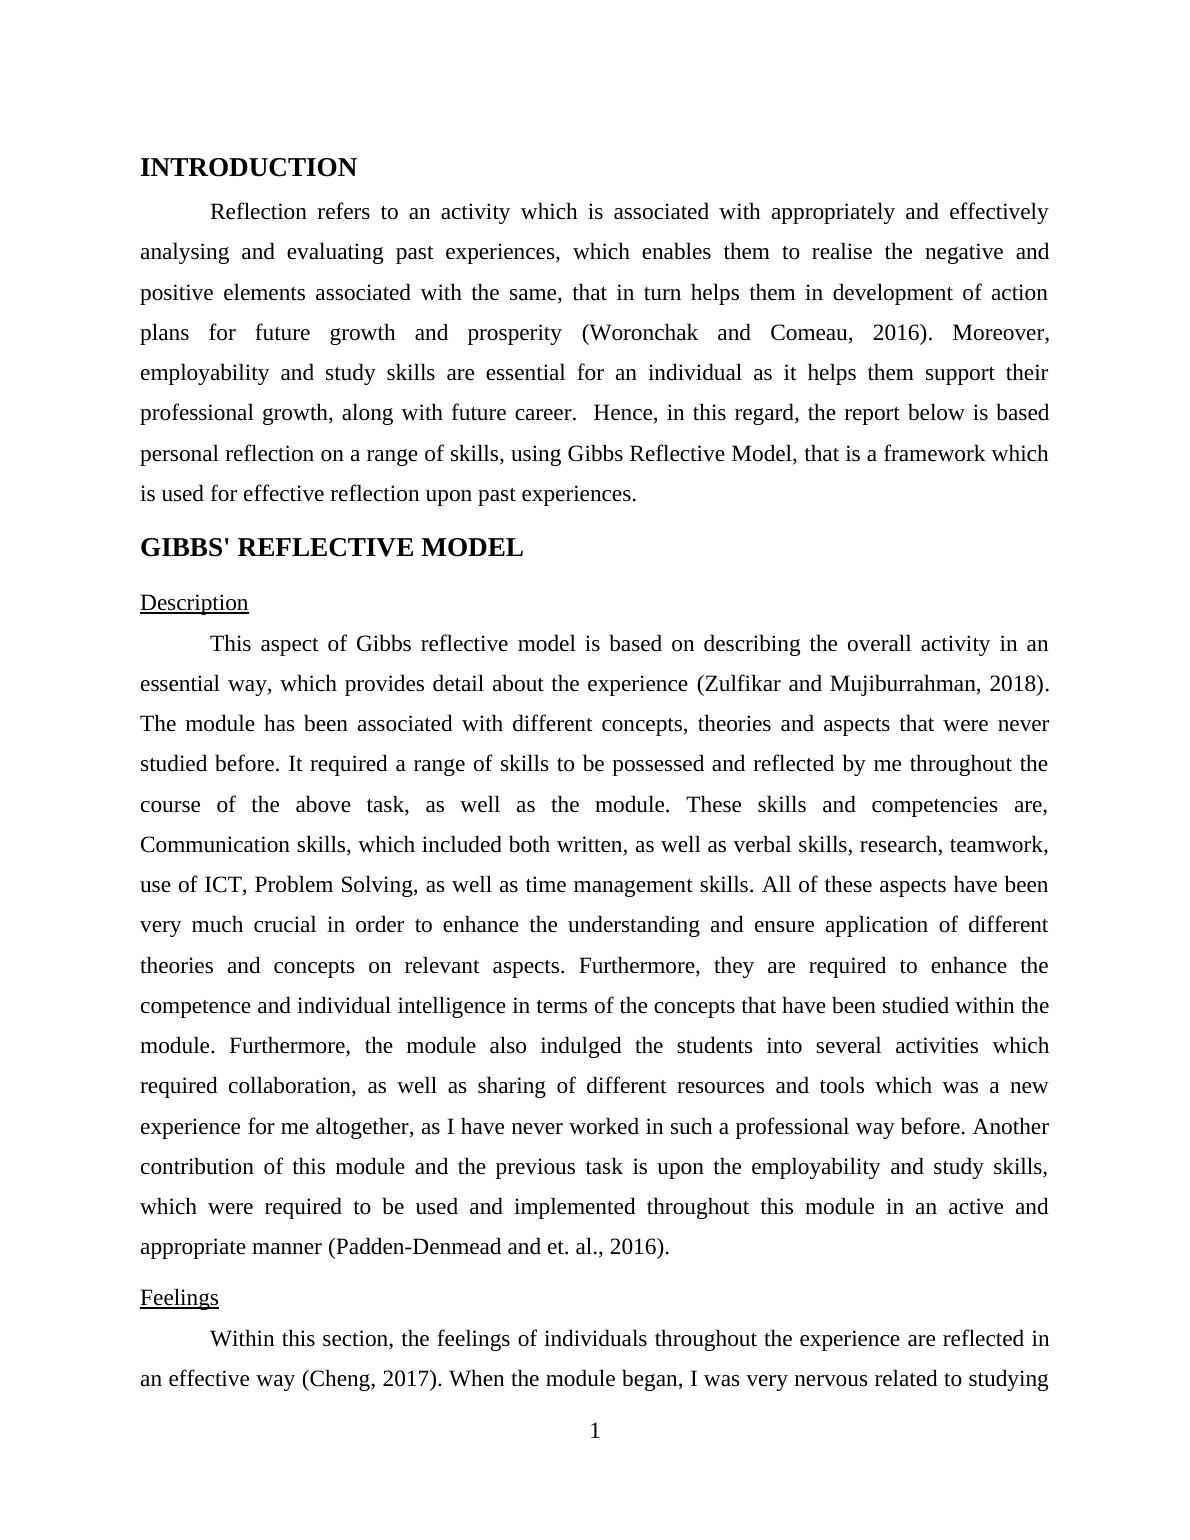 Reflective Journal on Gibbs' Reflective Model_3